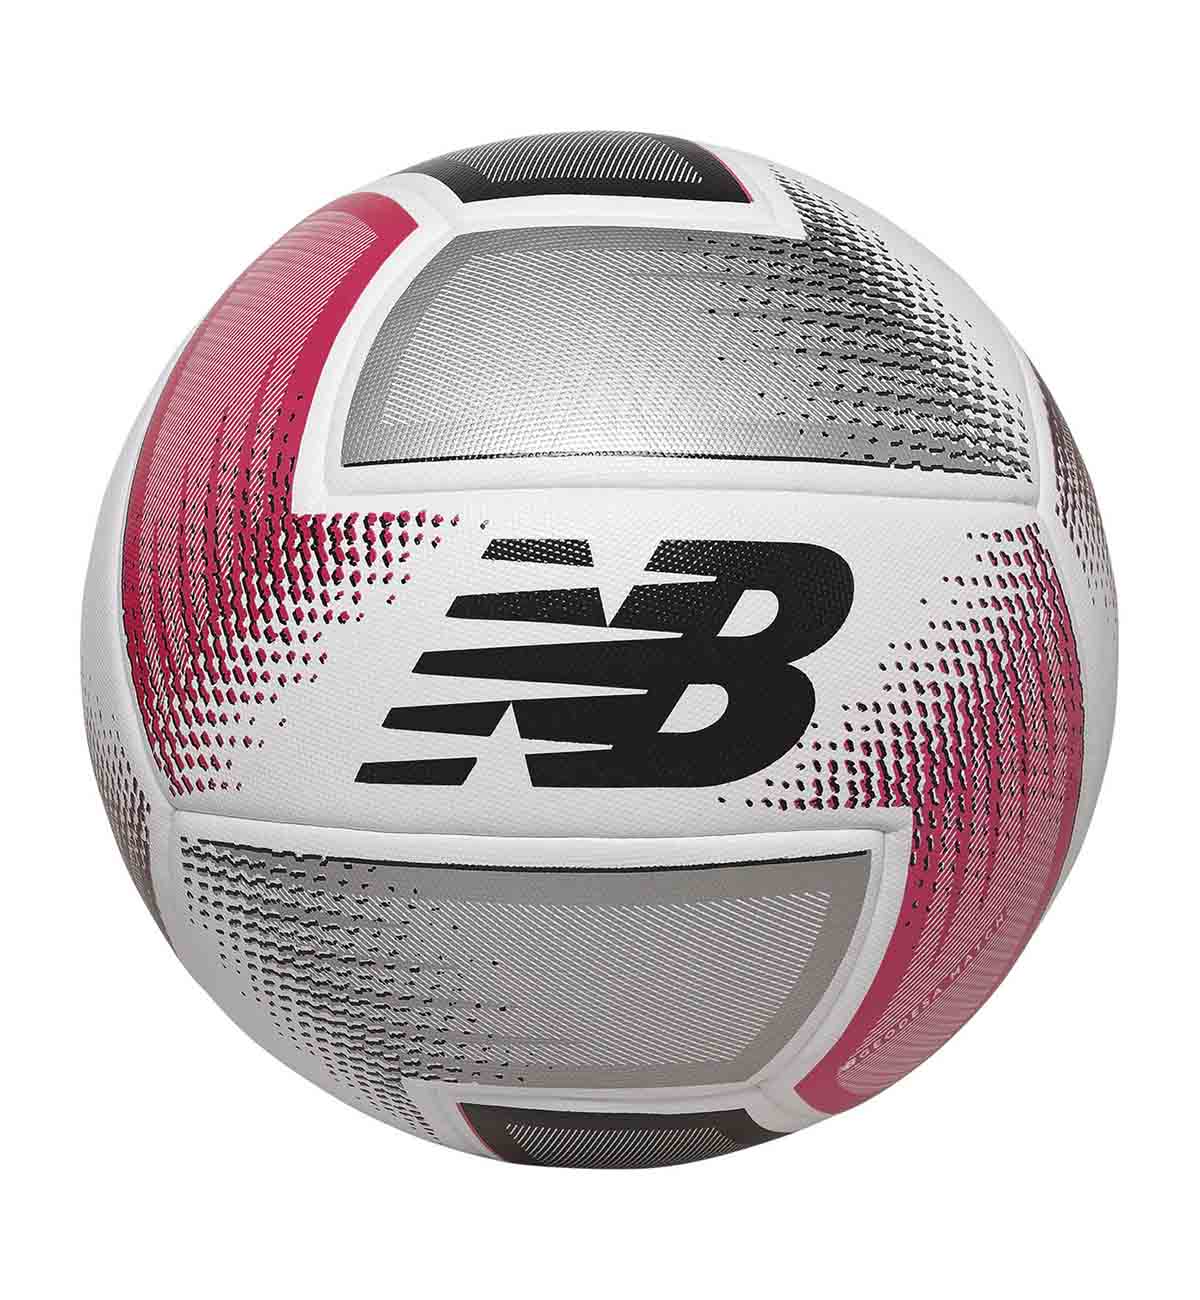 FIFA white/pink training ball